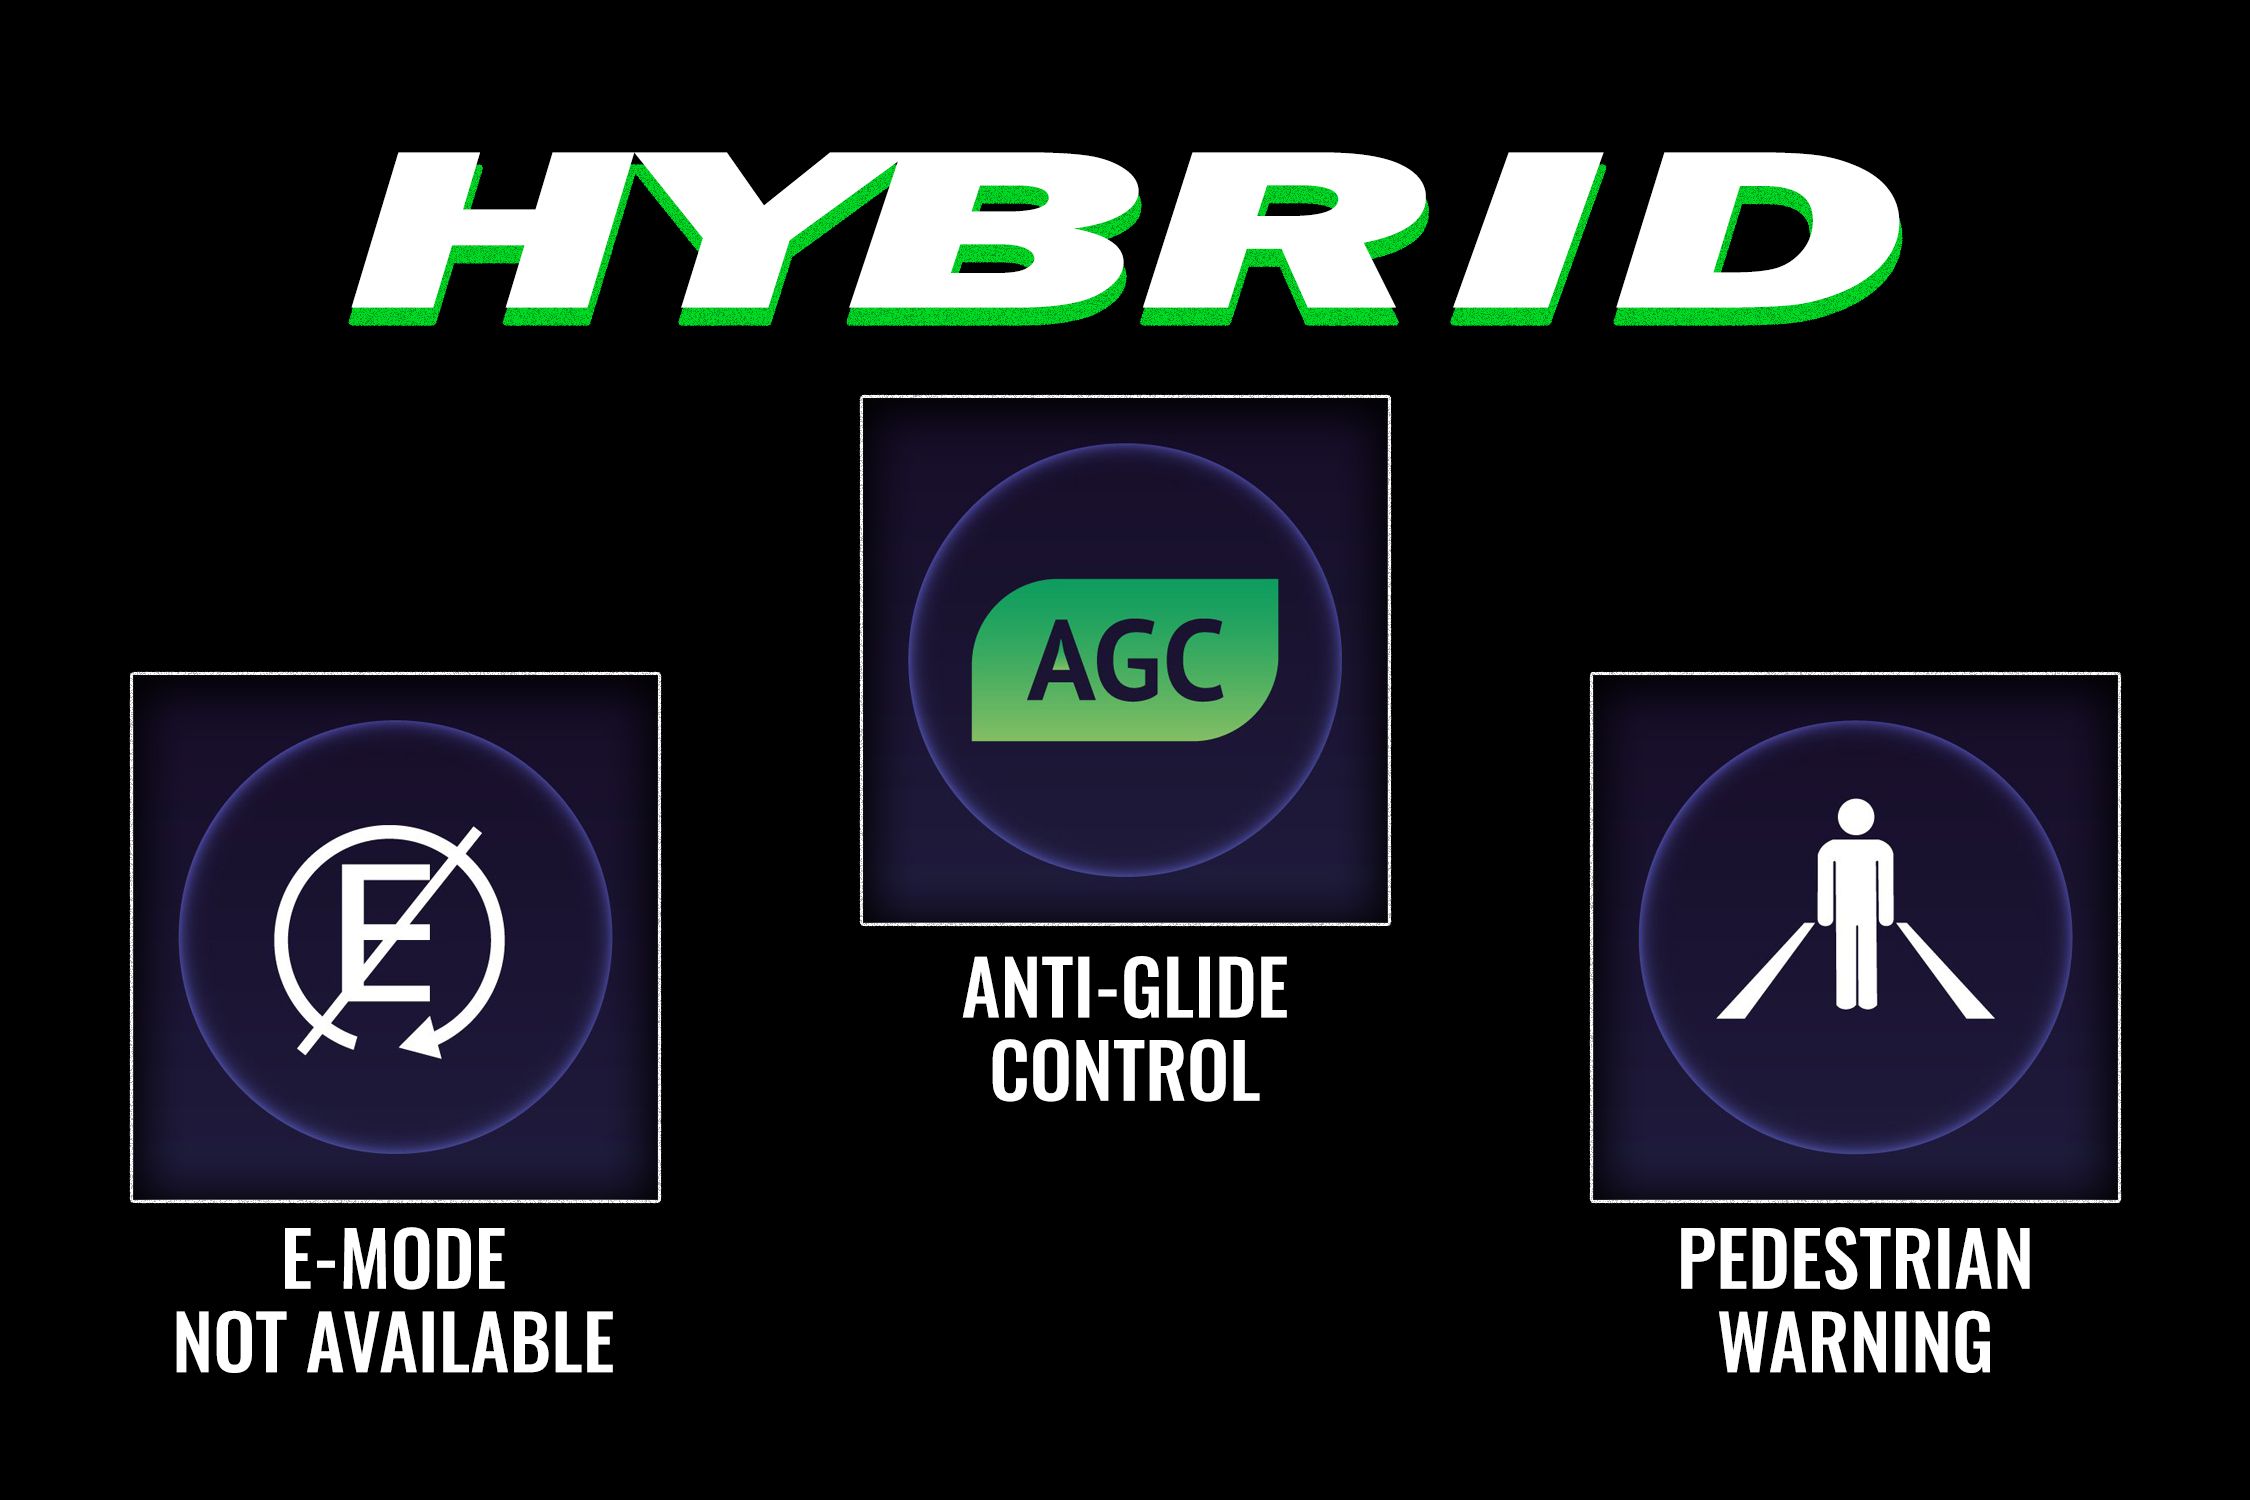 EV/Hybrid Symbols Quiz